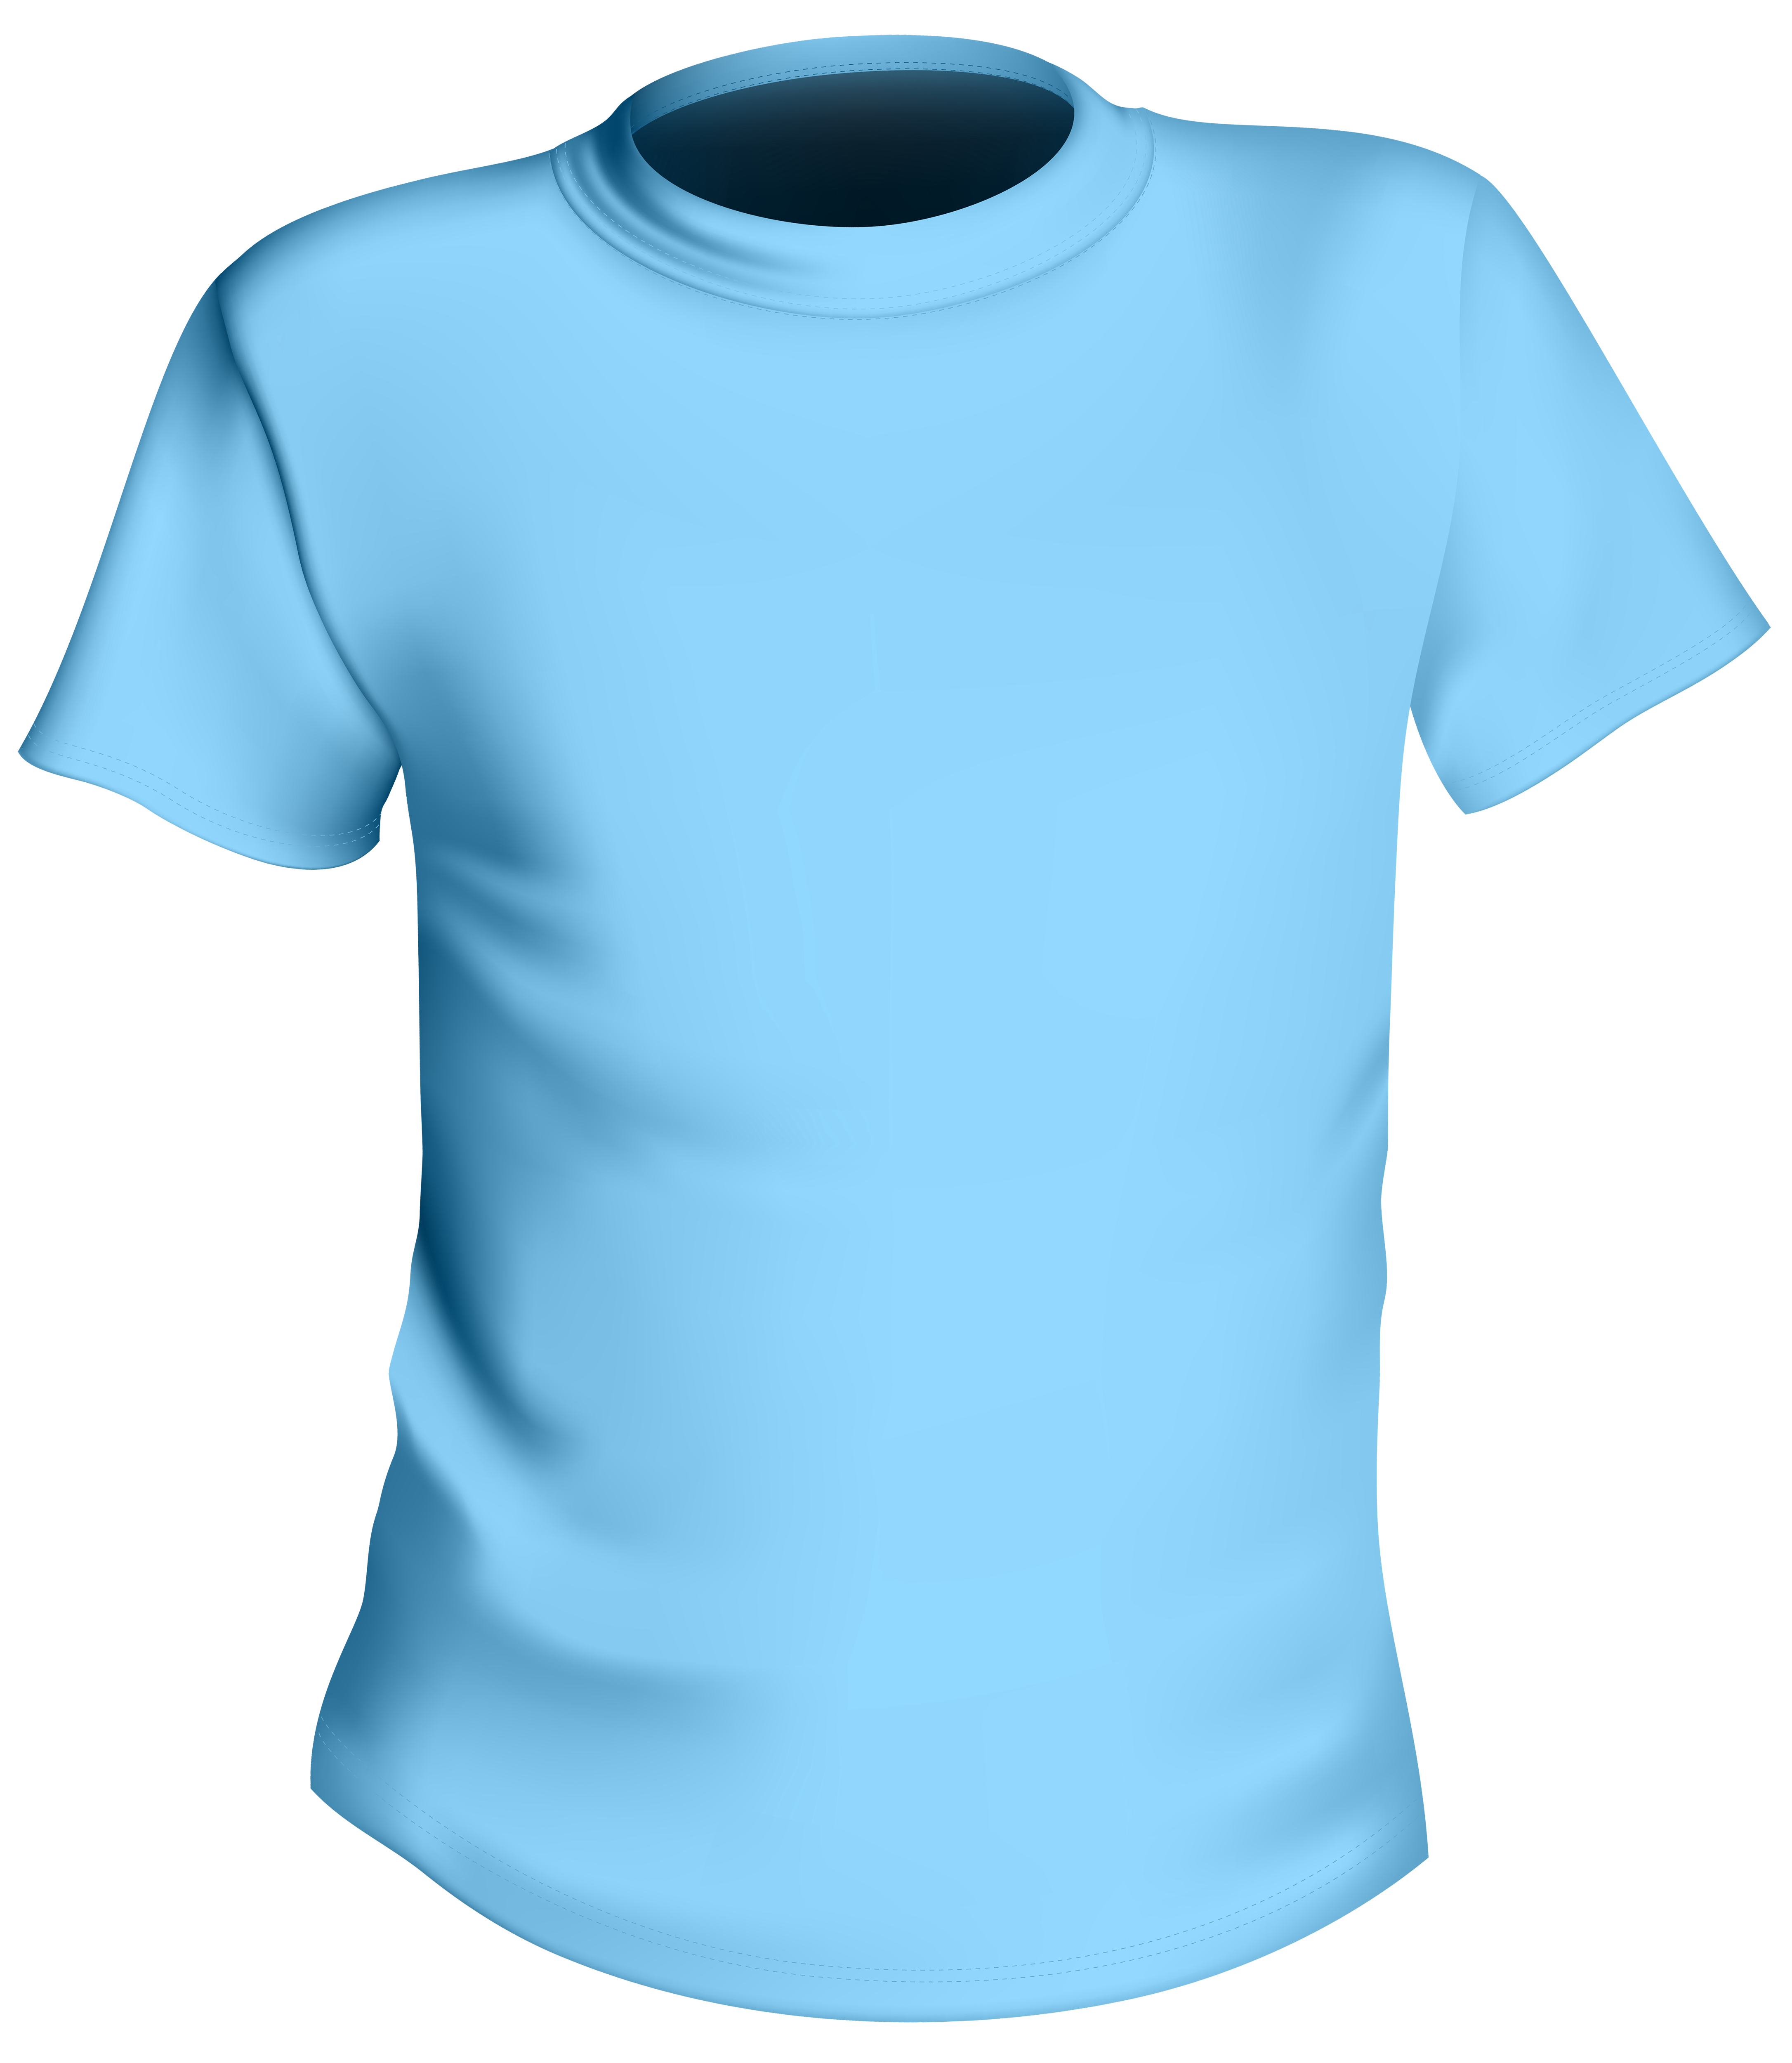 Blue Male Shirt PNG Clipart - Best WEB Clipart